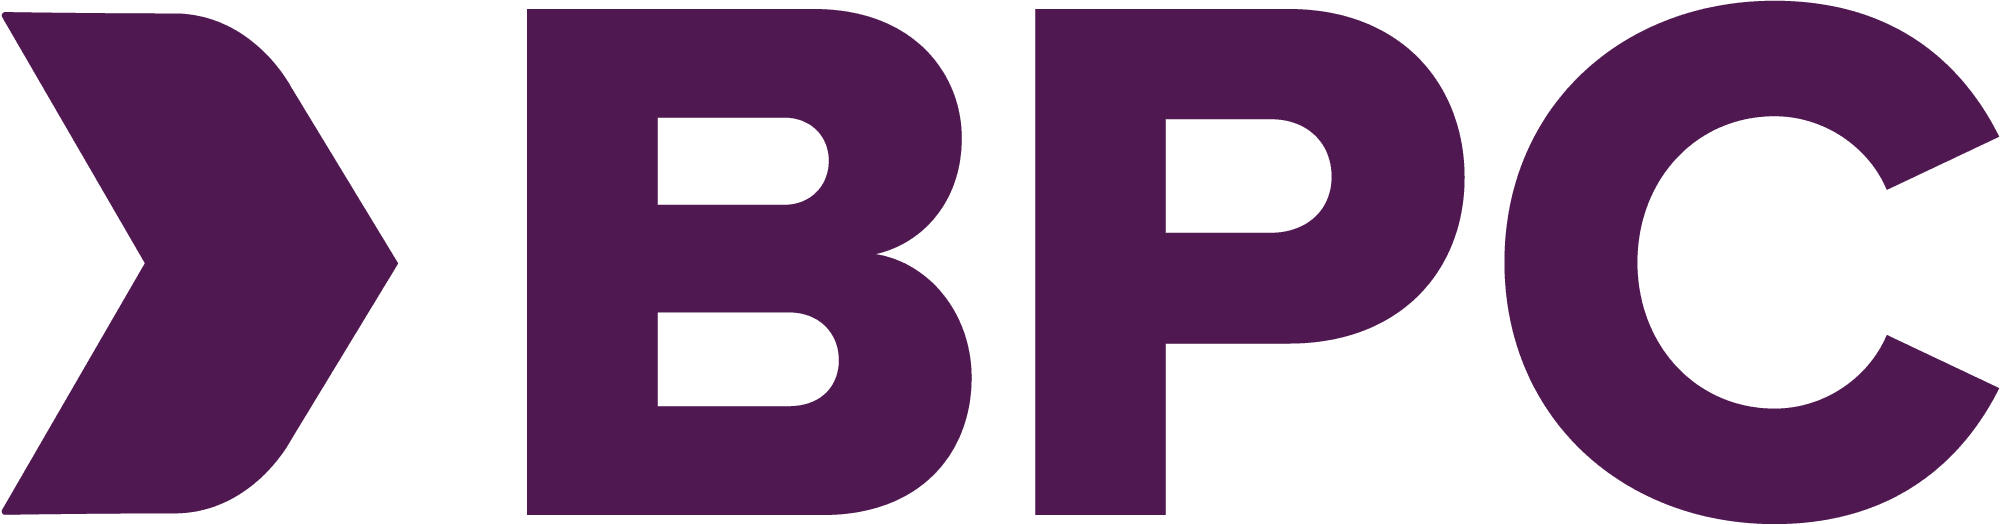 bpc-logo-2000x525-—-копия